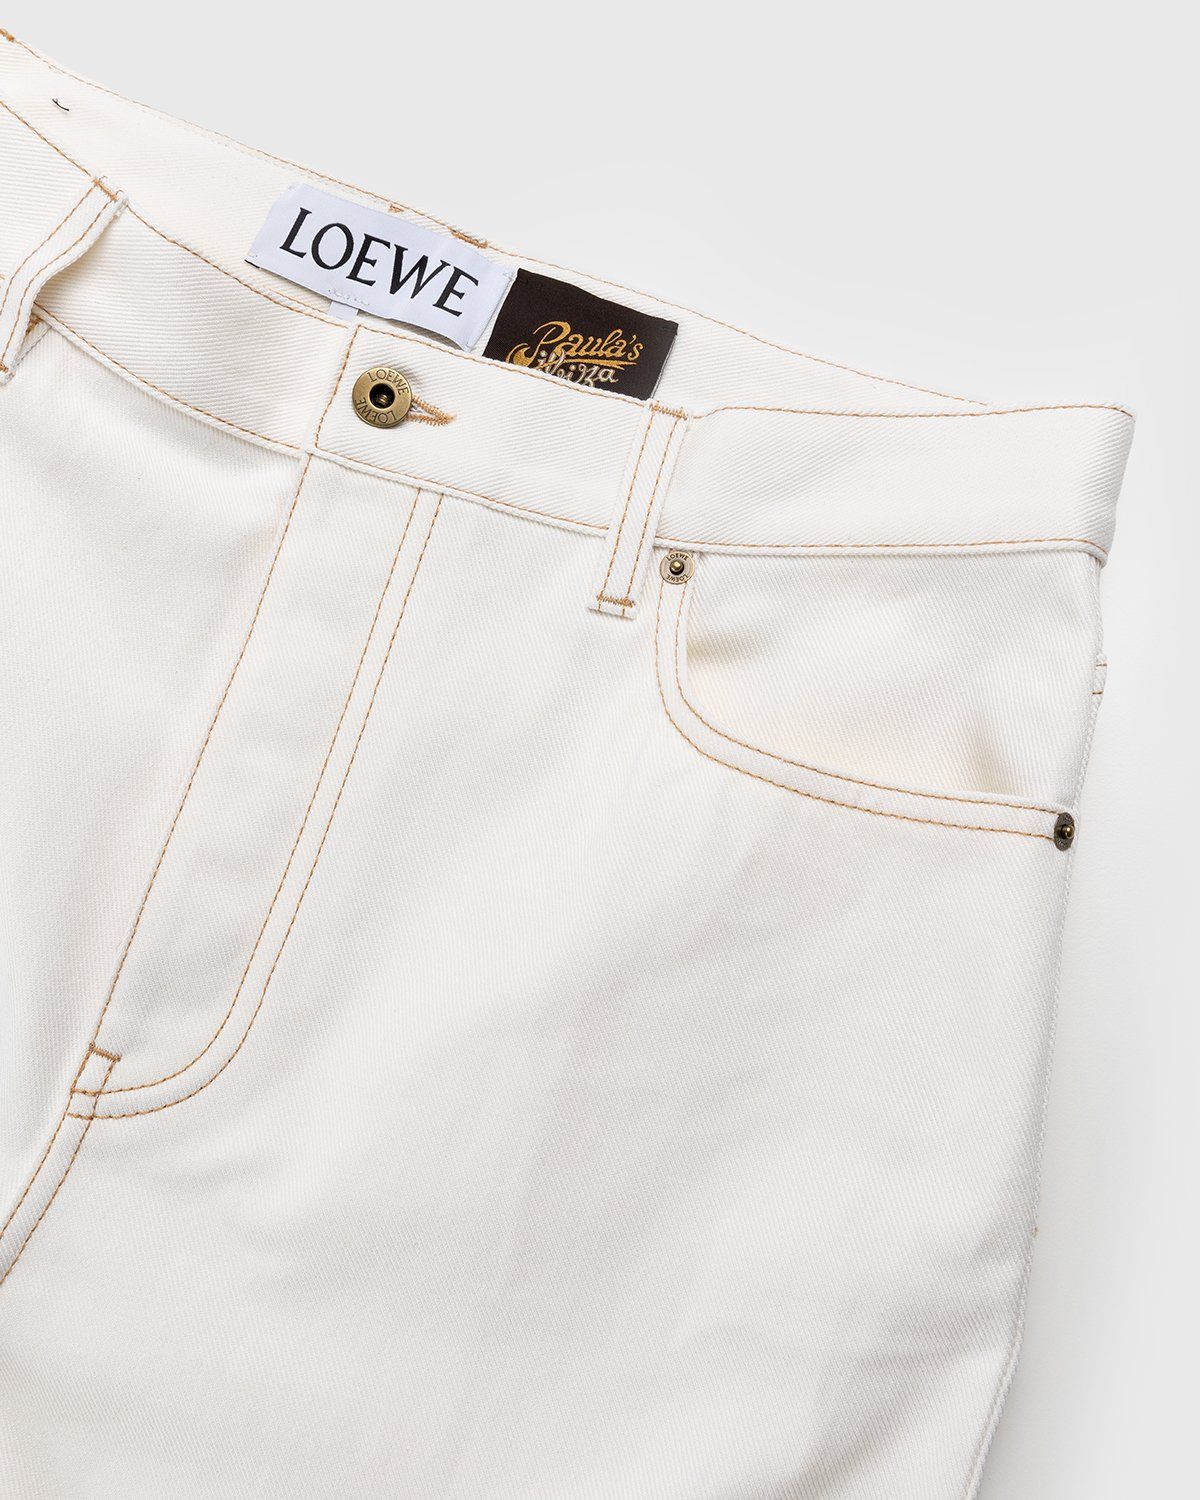 Loewe – Paula's Ibiza Boot Cut Denim Trousers White - Pants - White - Image 4